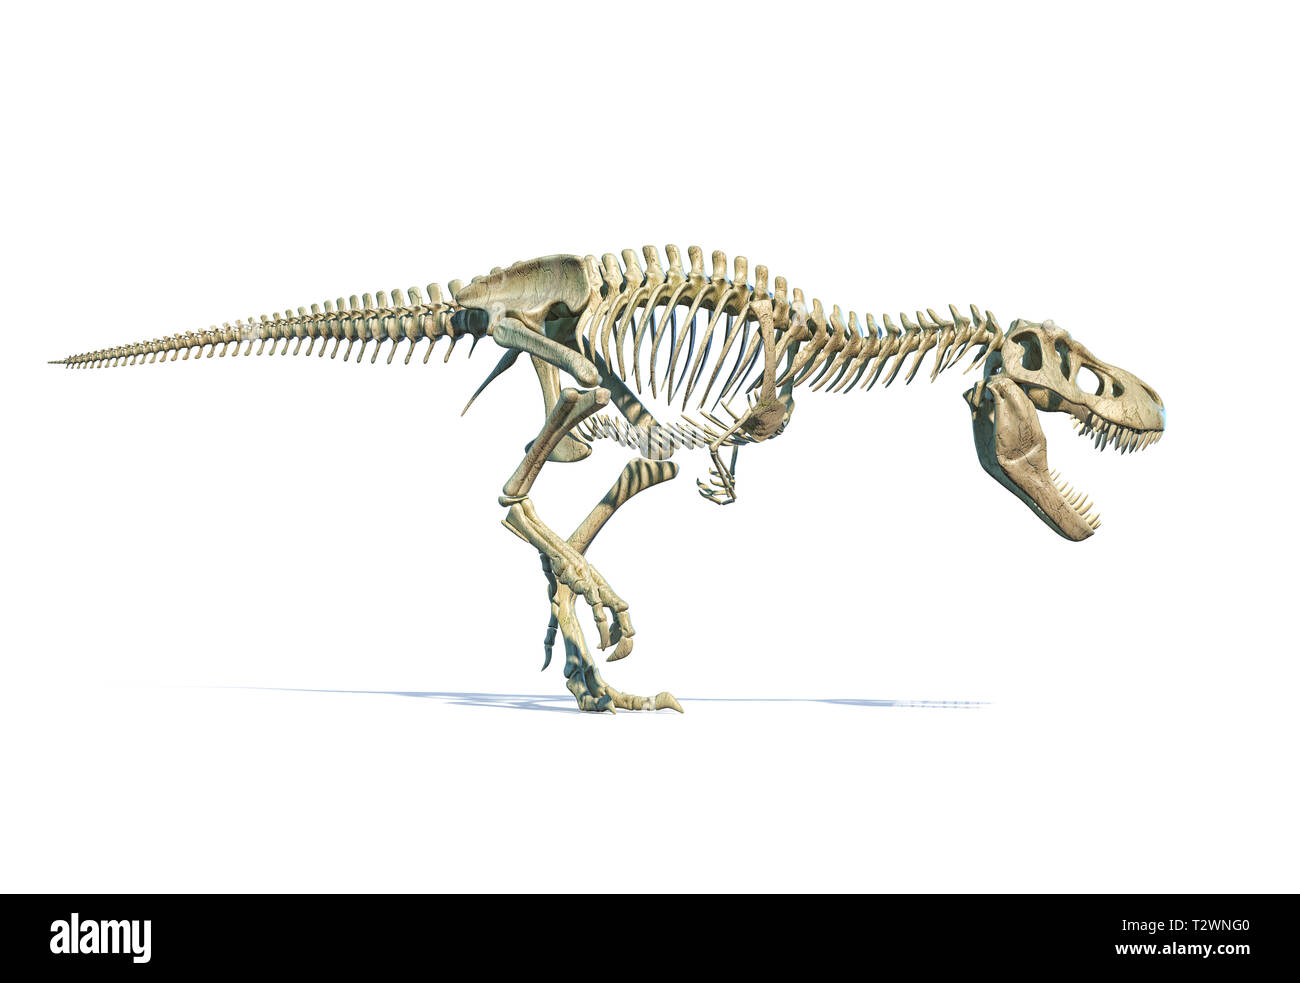 Tyrannosaurus Rex dinosaur photorealistic 3d rendering of full skeleton on white background. Stock Photo